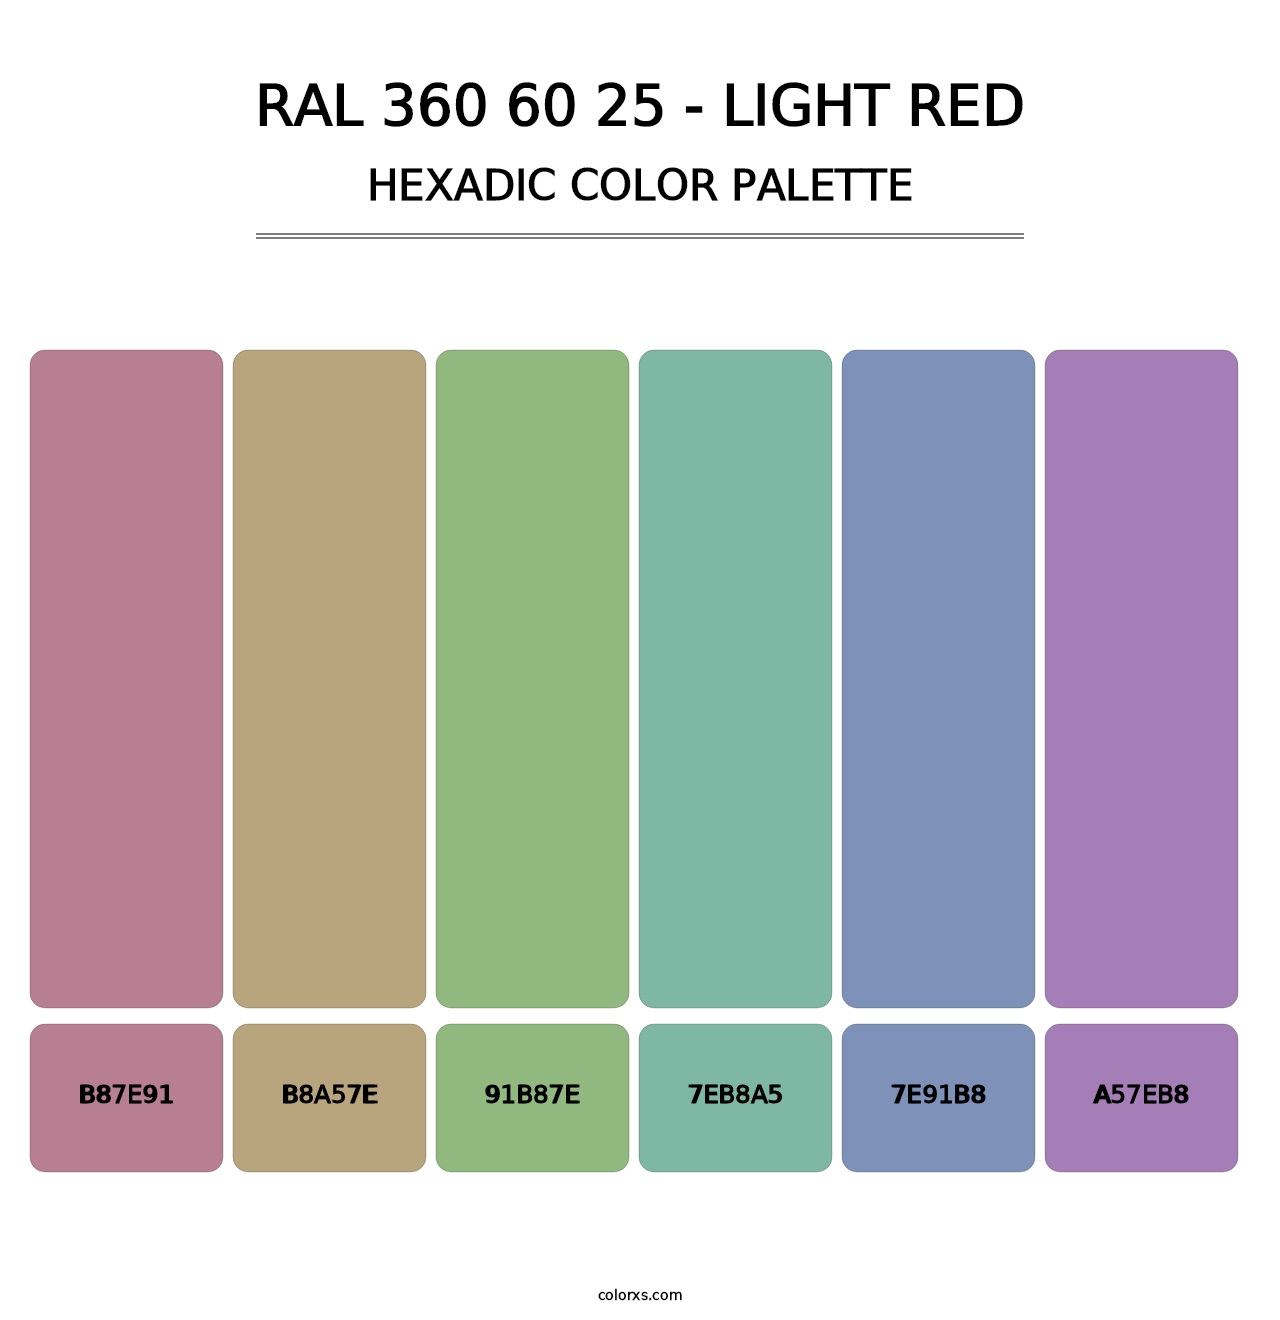 RAL 360 60 25 - Light Red - Hexadic Color Palette